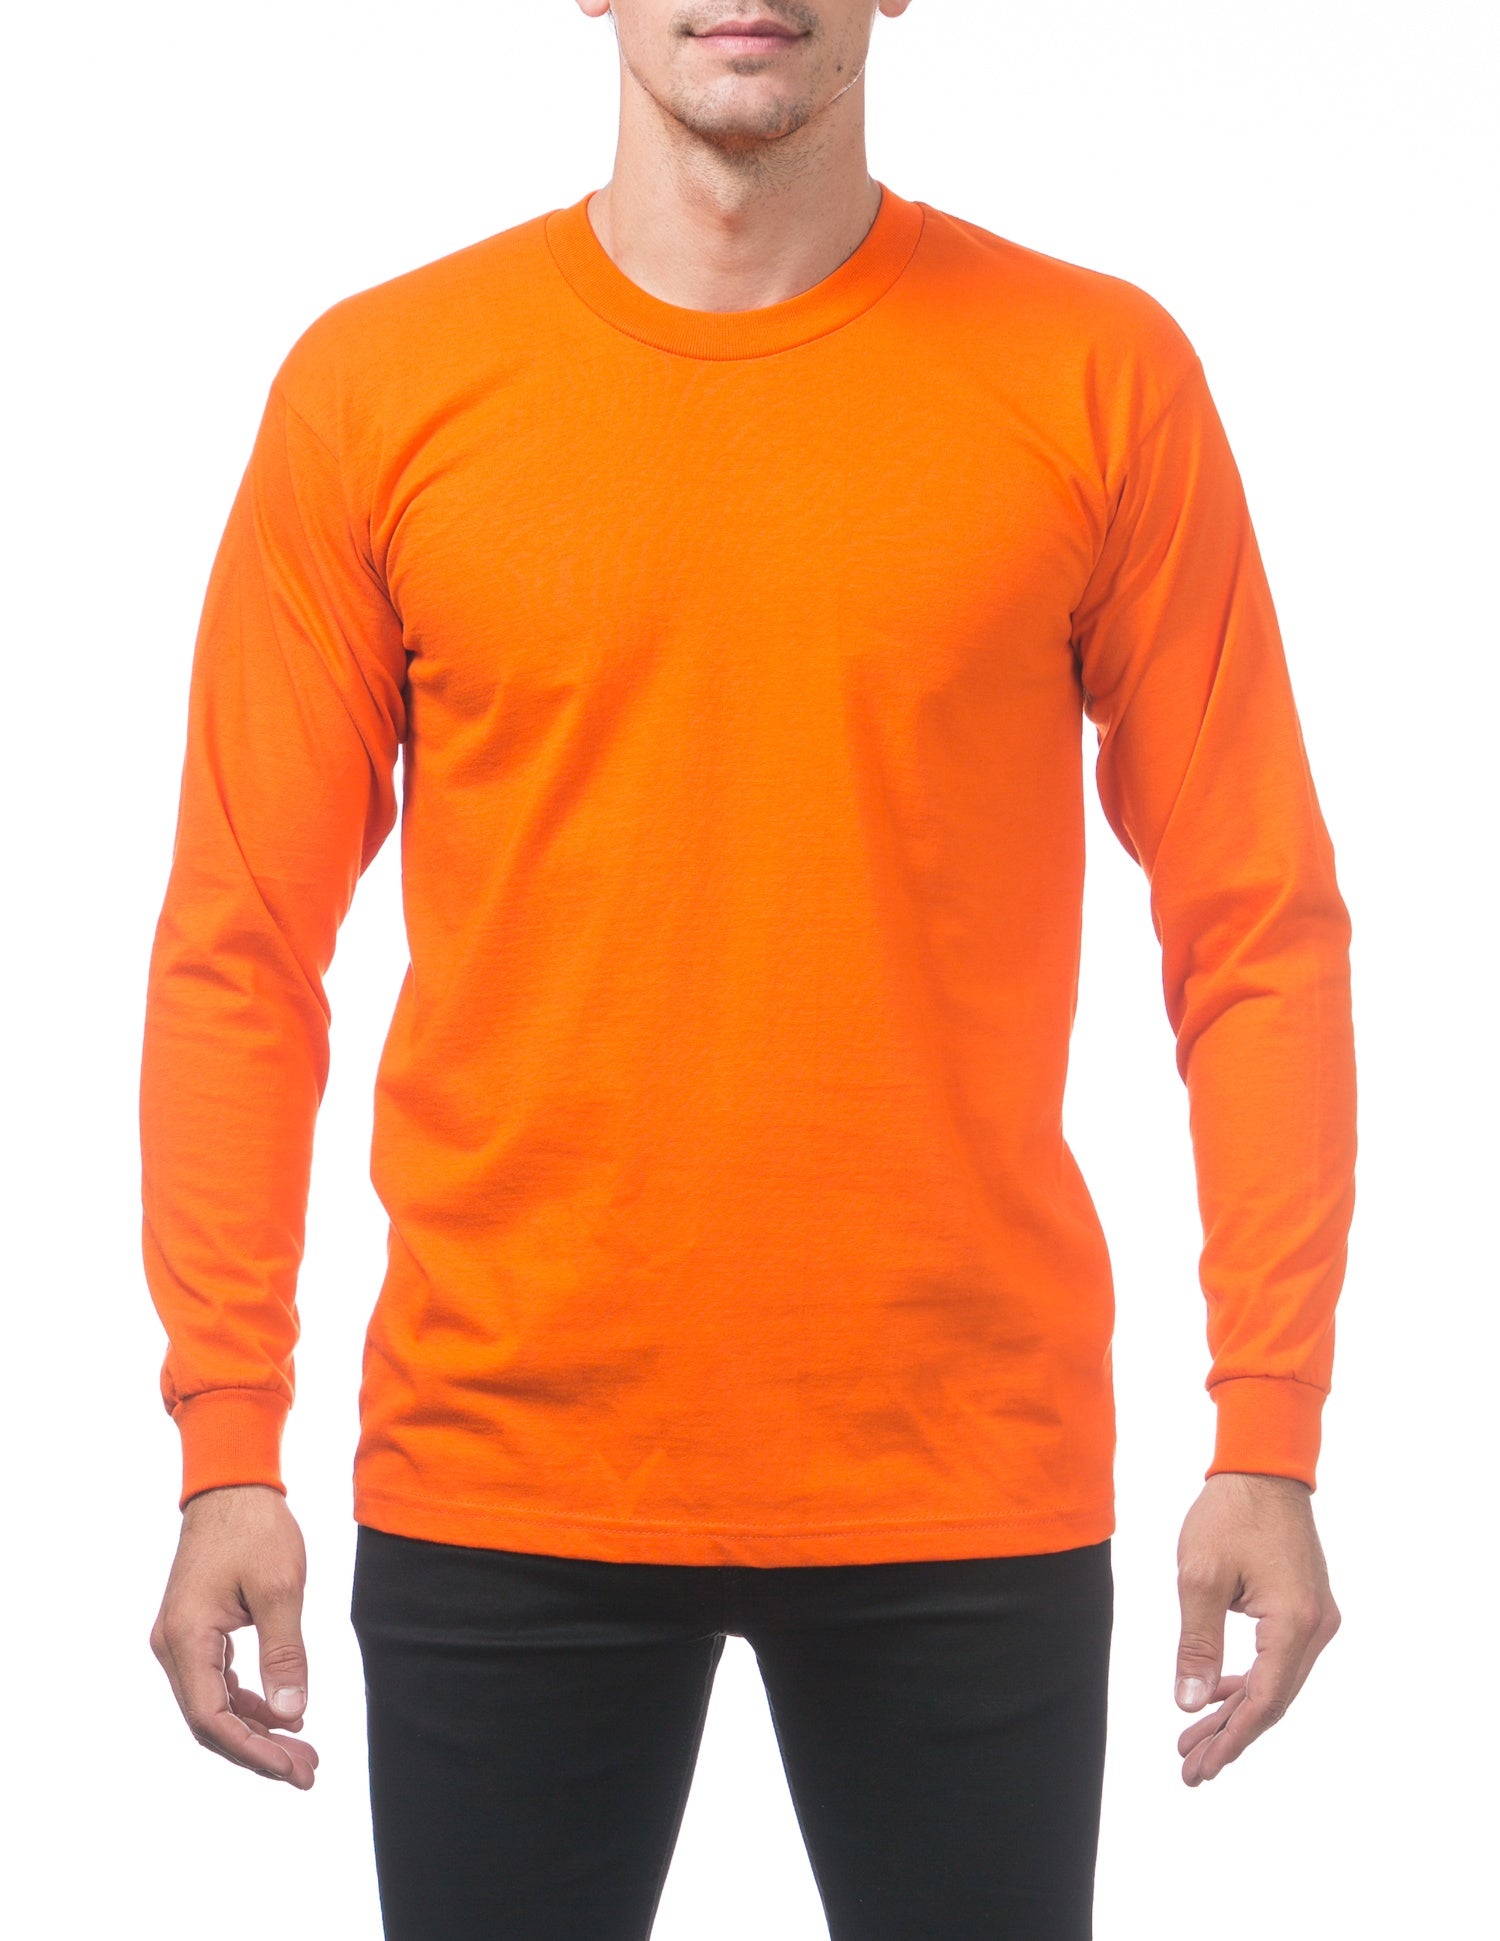 Pro Club Heavyweight Cotton Long Sleeve Crew Neck –Orange Tan